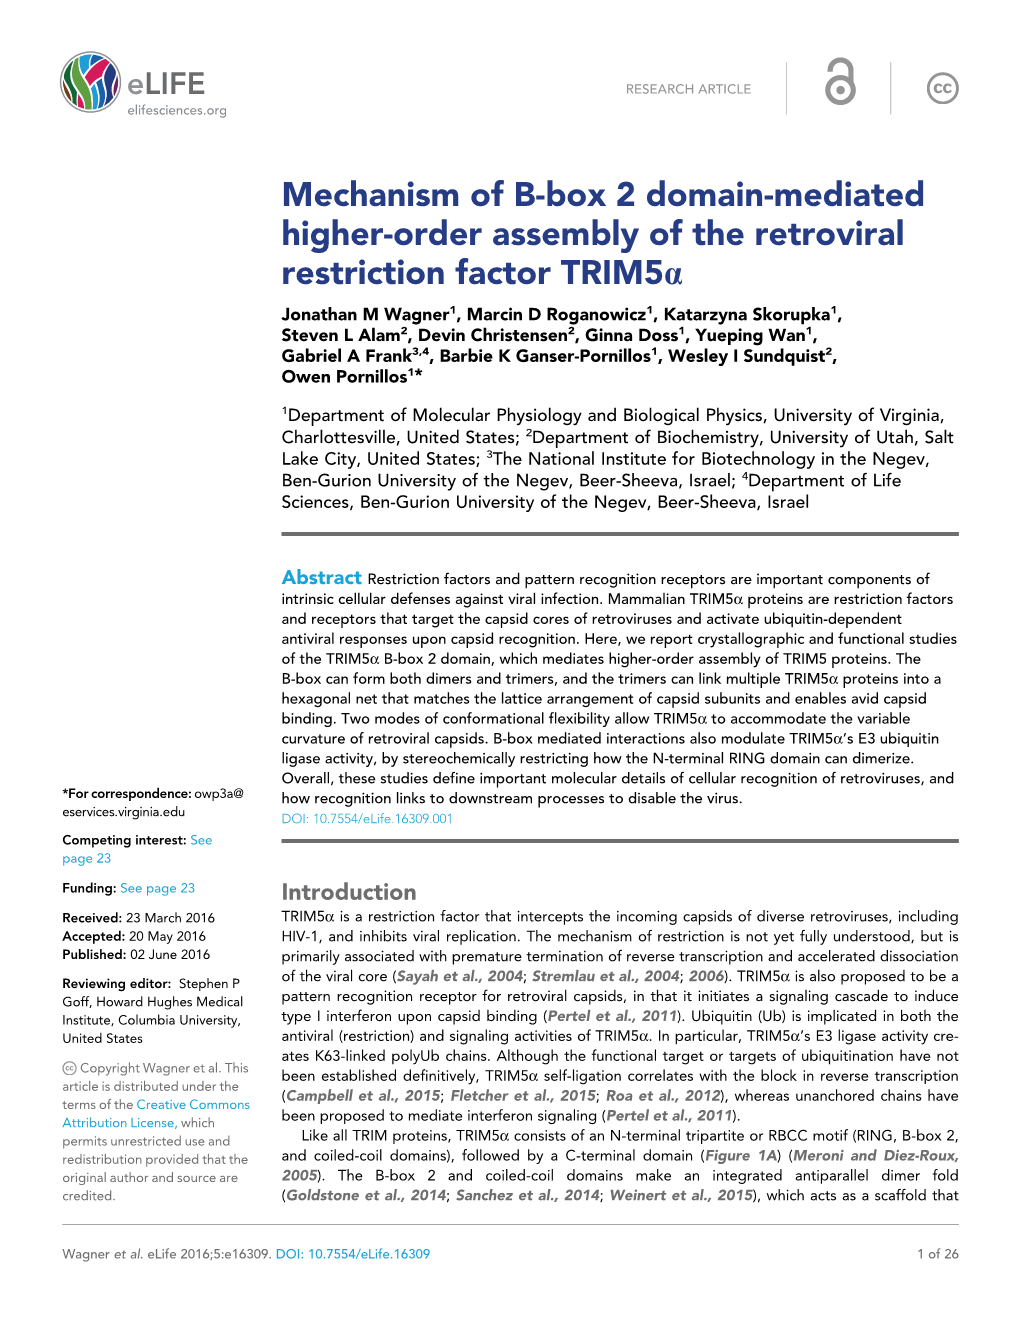 Mechanism of B-Box 2 Domain-Mediated Higher